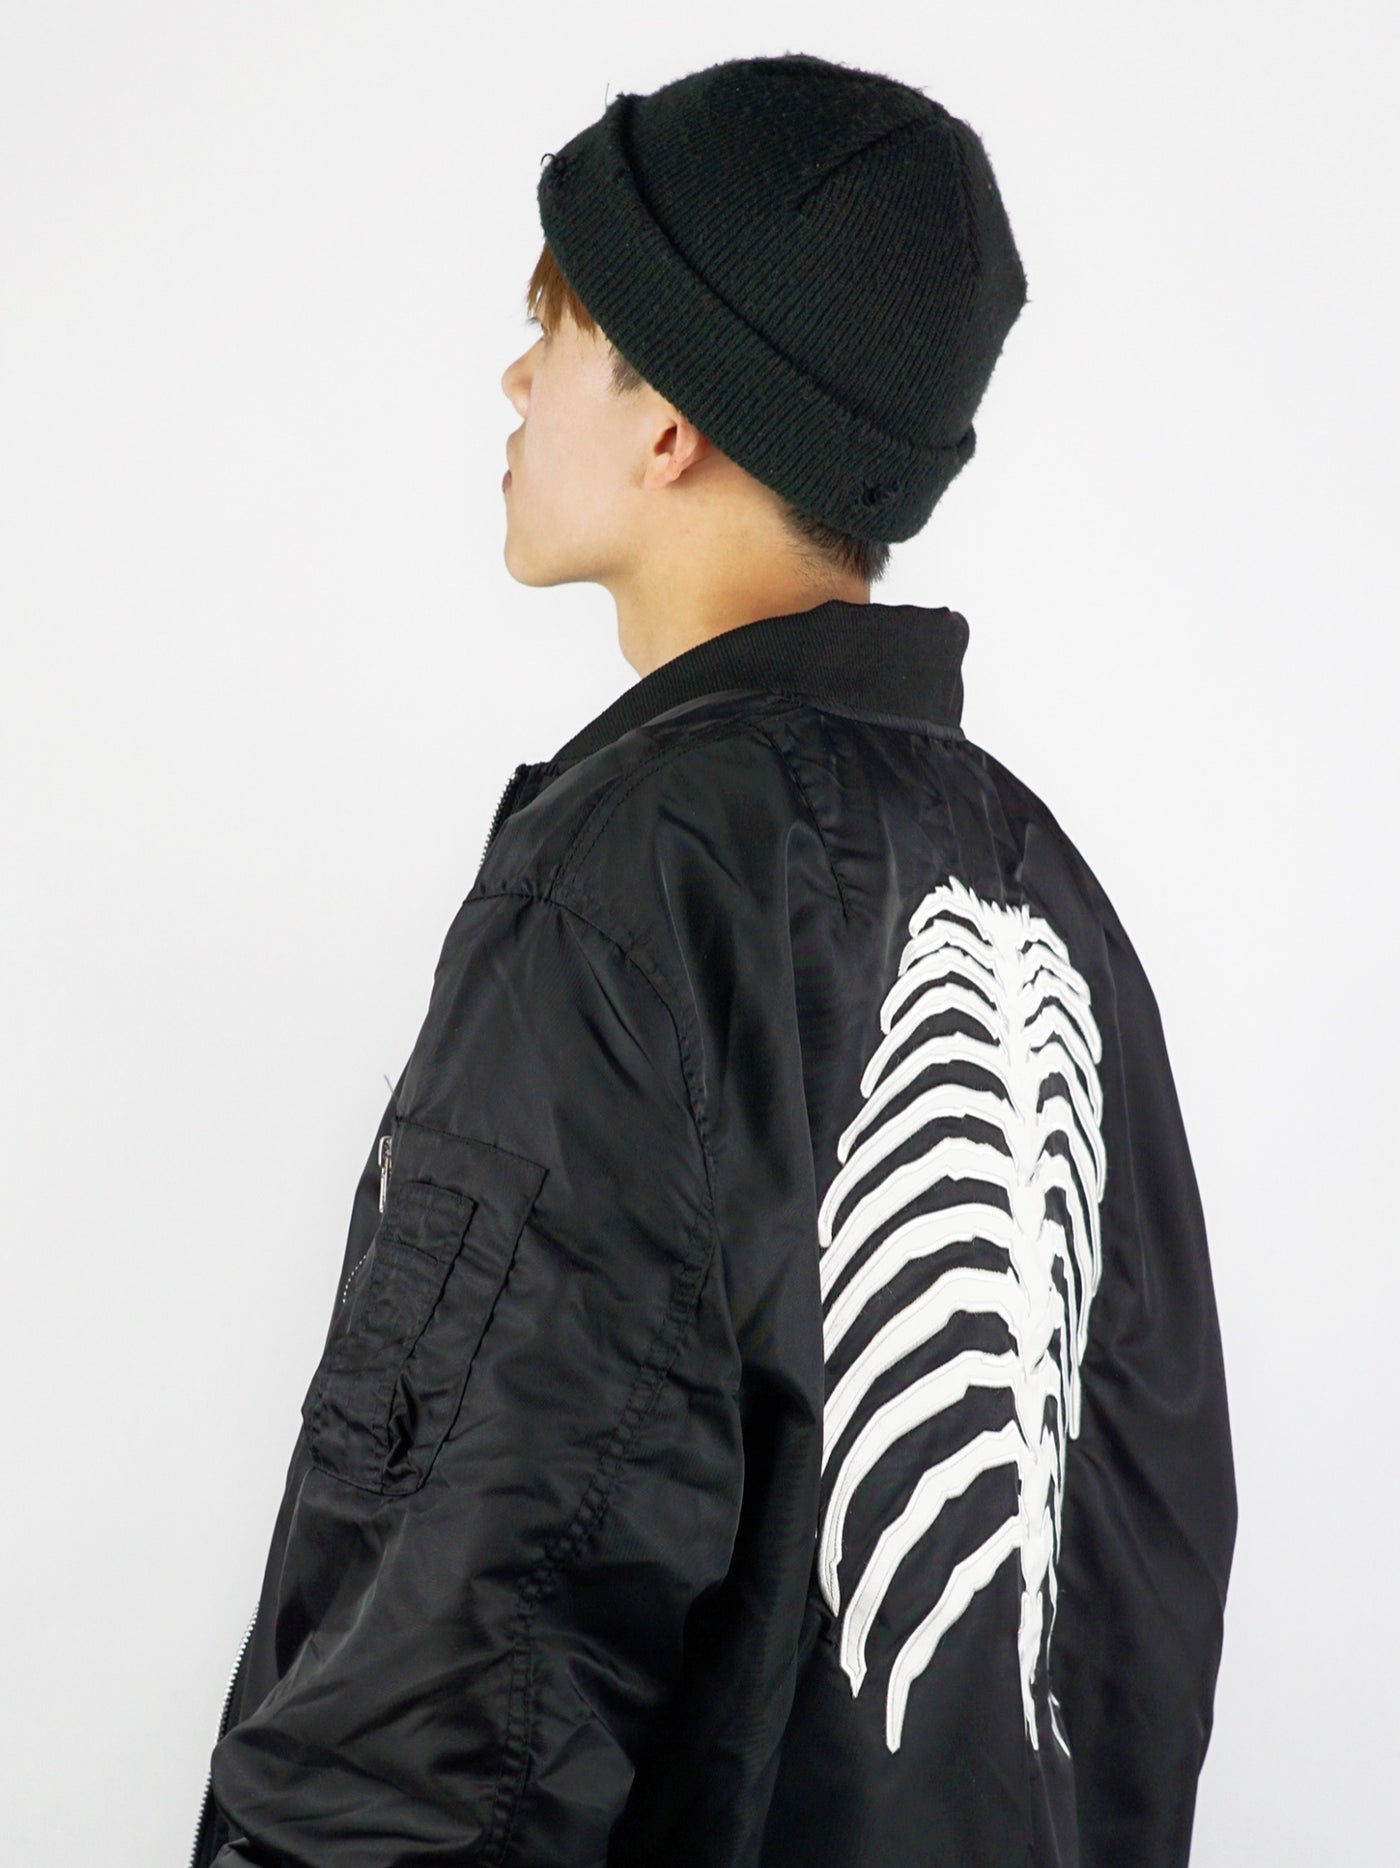 F3F Select Embroidery Skull Skeleton Zipper Flight Jacket